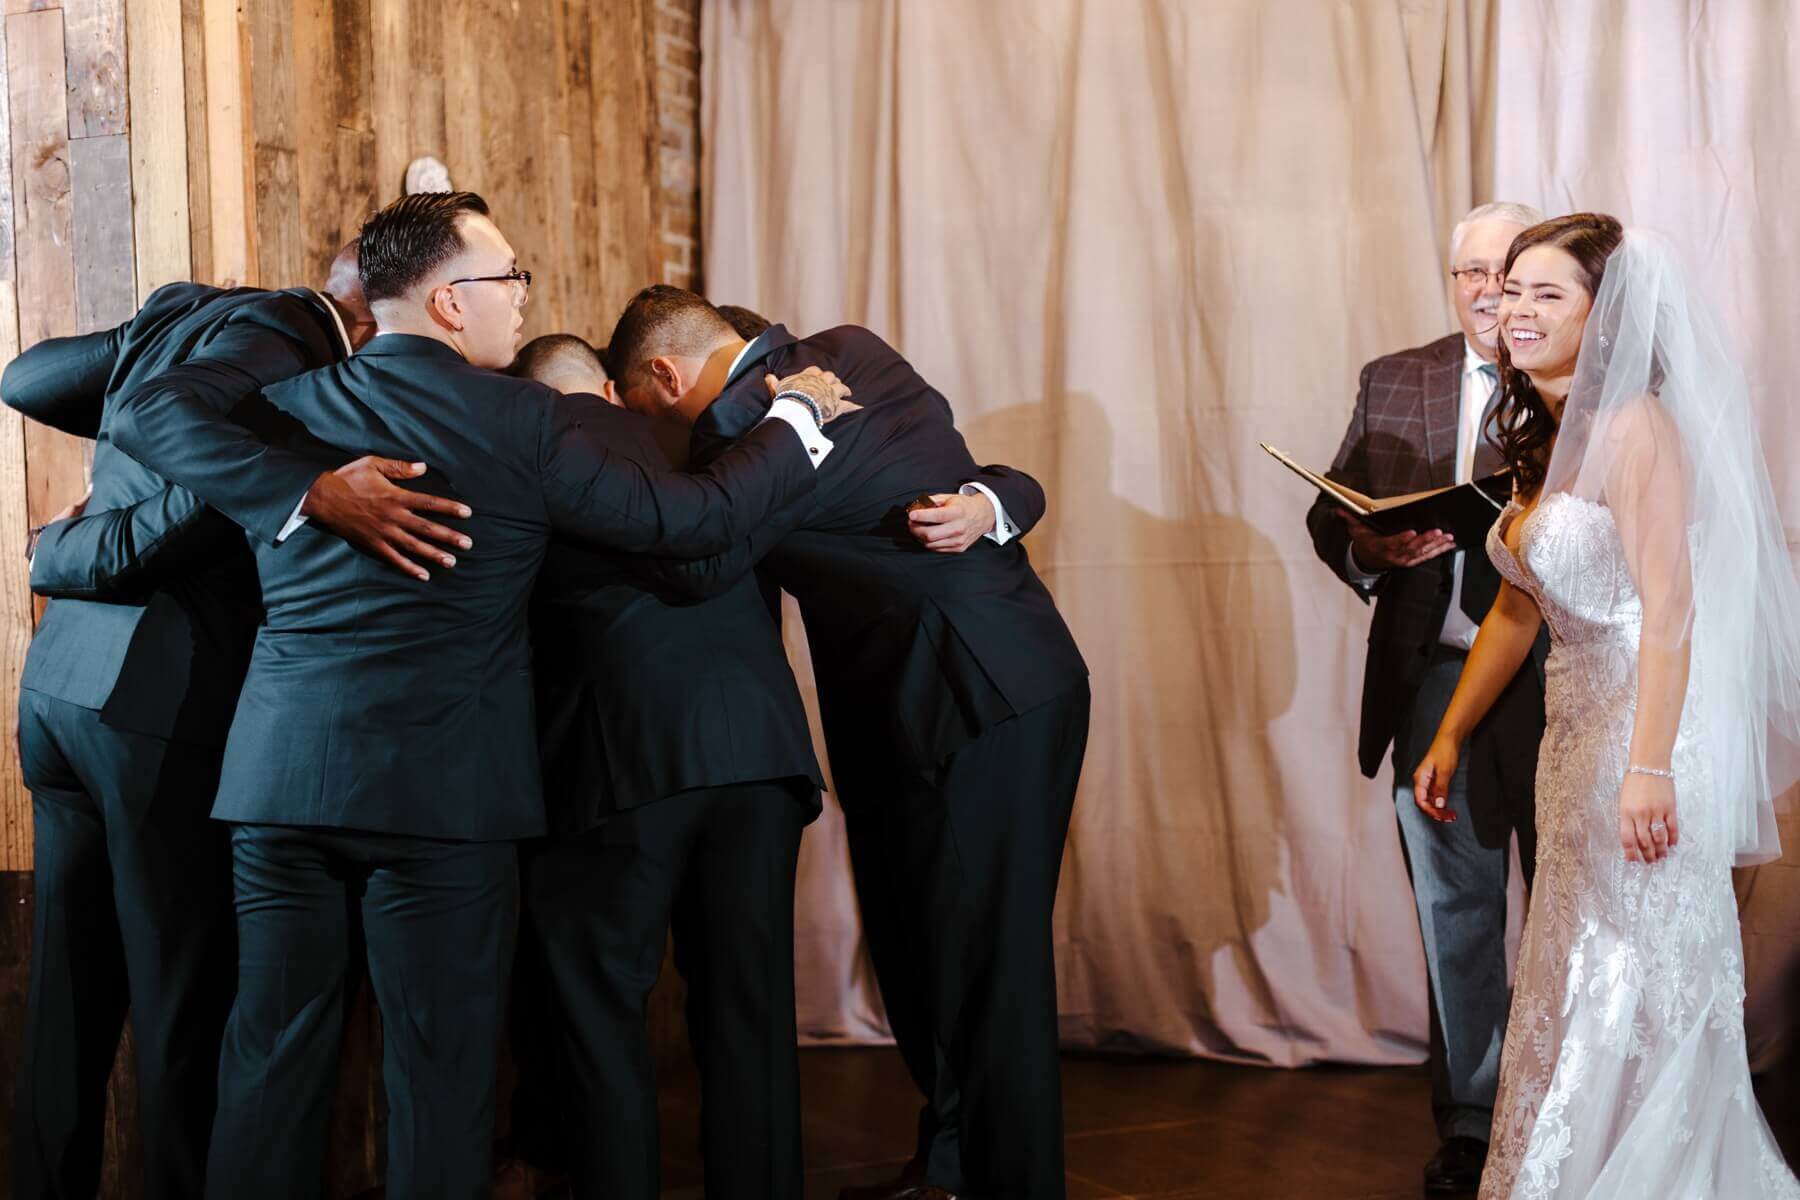 Groom hugging groomsmen during ceremony